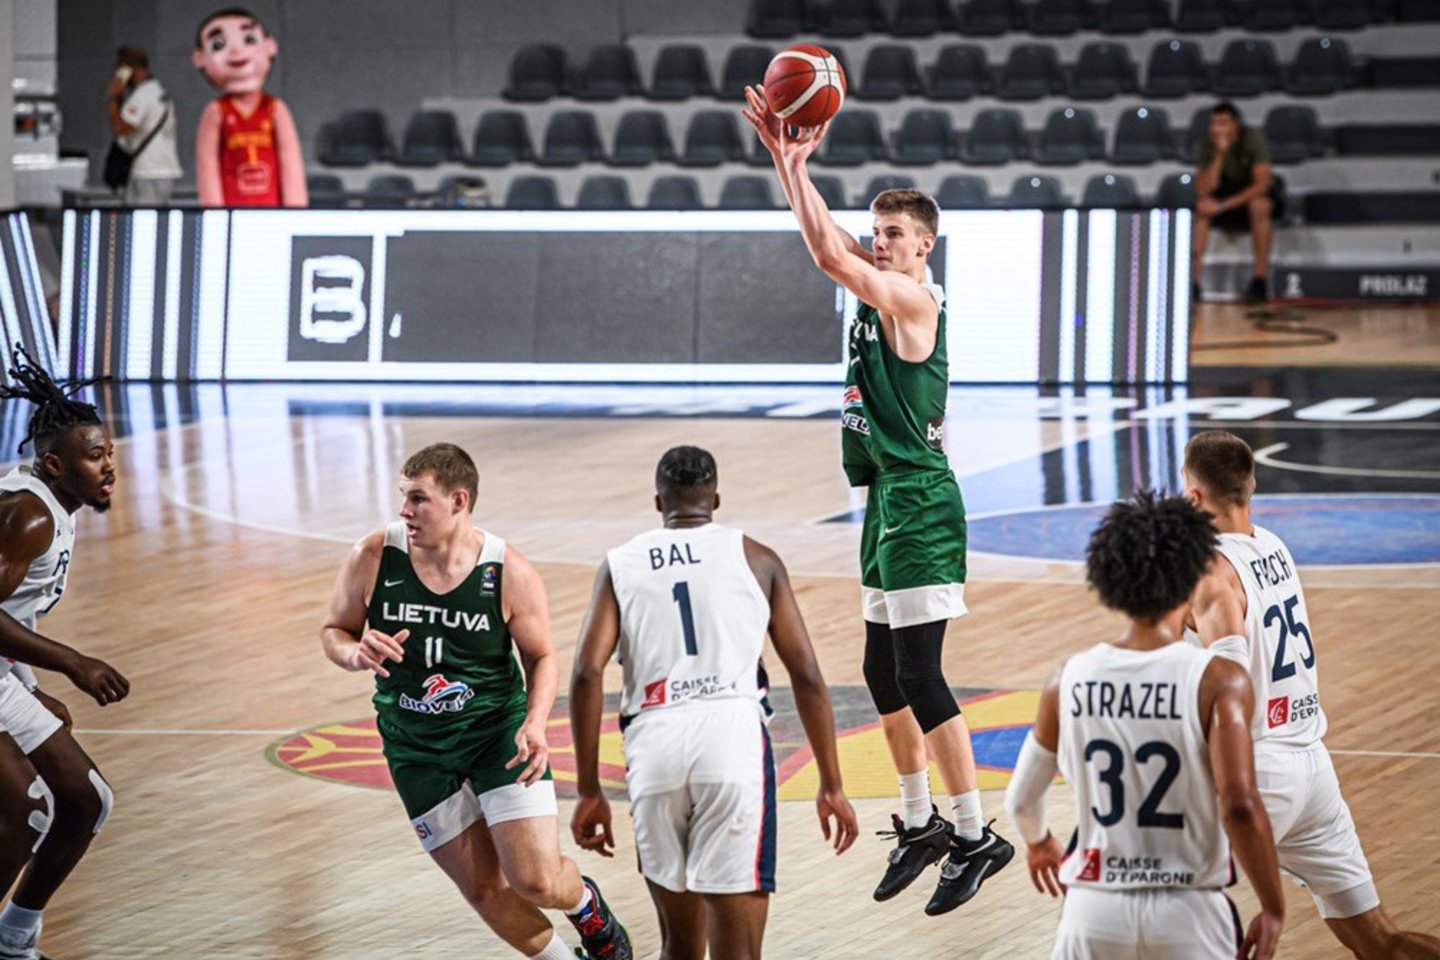  Mantas Rubštavičius<br> FIBA nuotr.